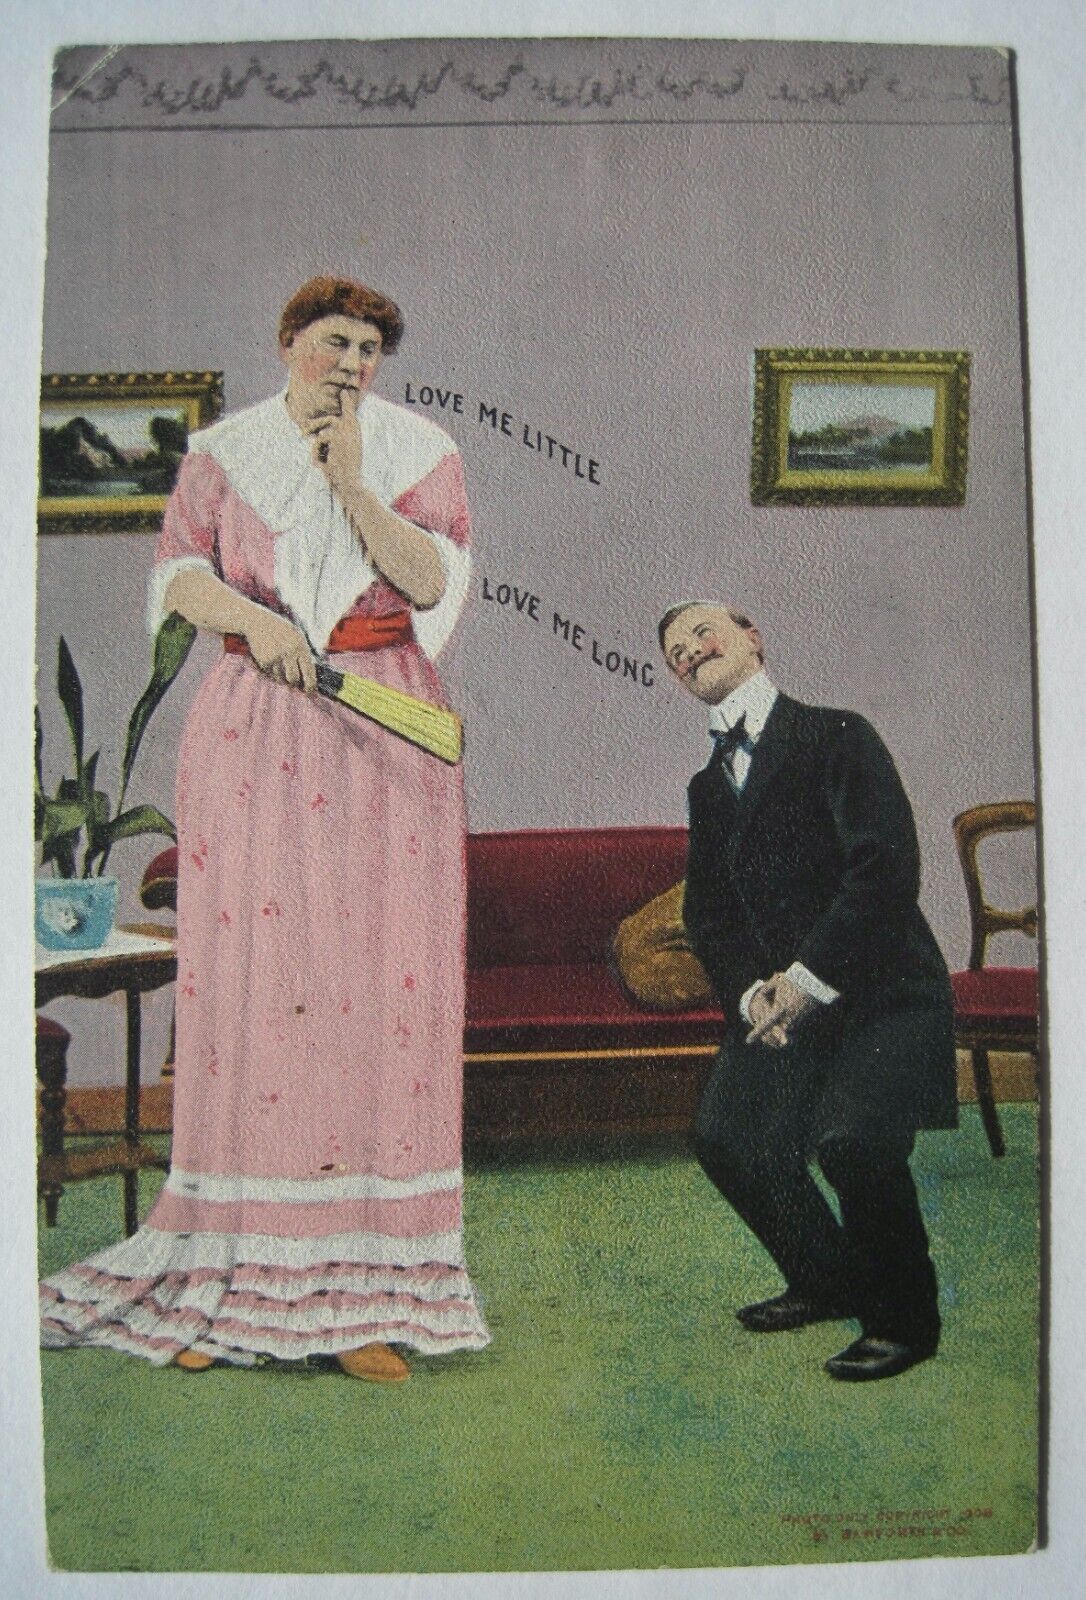 Tall Woman, Short Man Old 1908 Humor Postcard by Bamforth Publ.